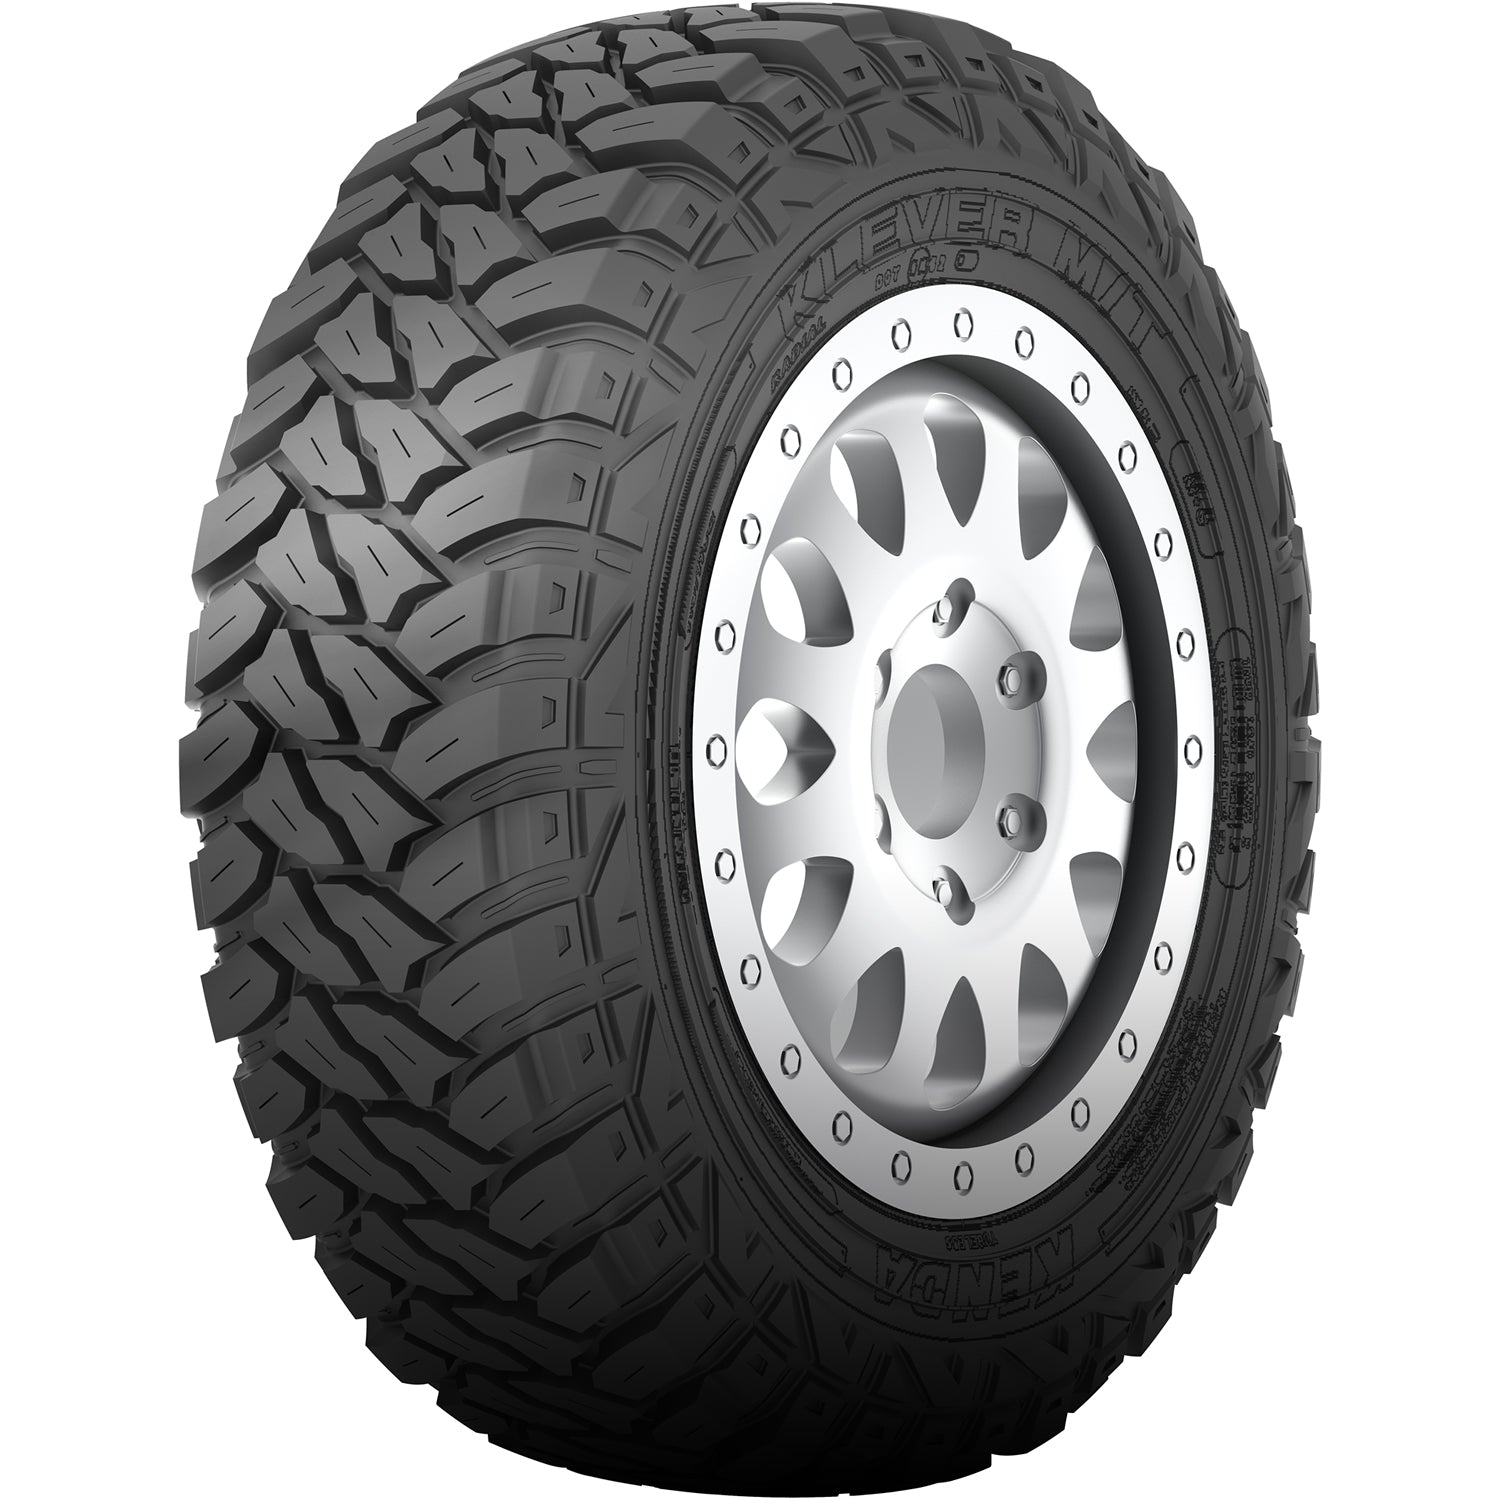 KENDA KLEVER MT LT235/85R16 (31.8X9.4R 16) Tires